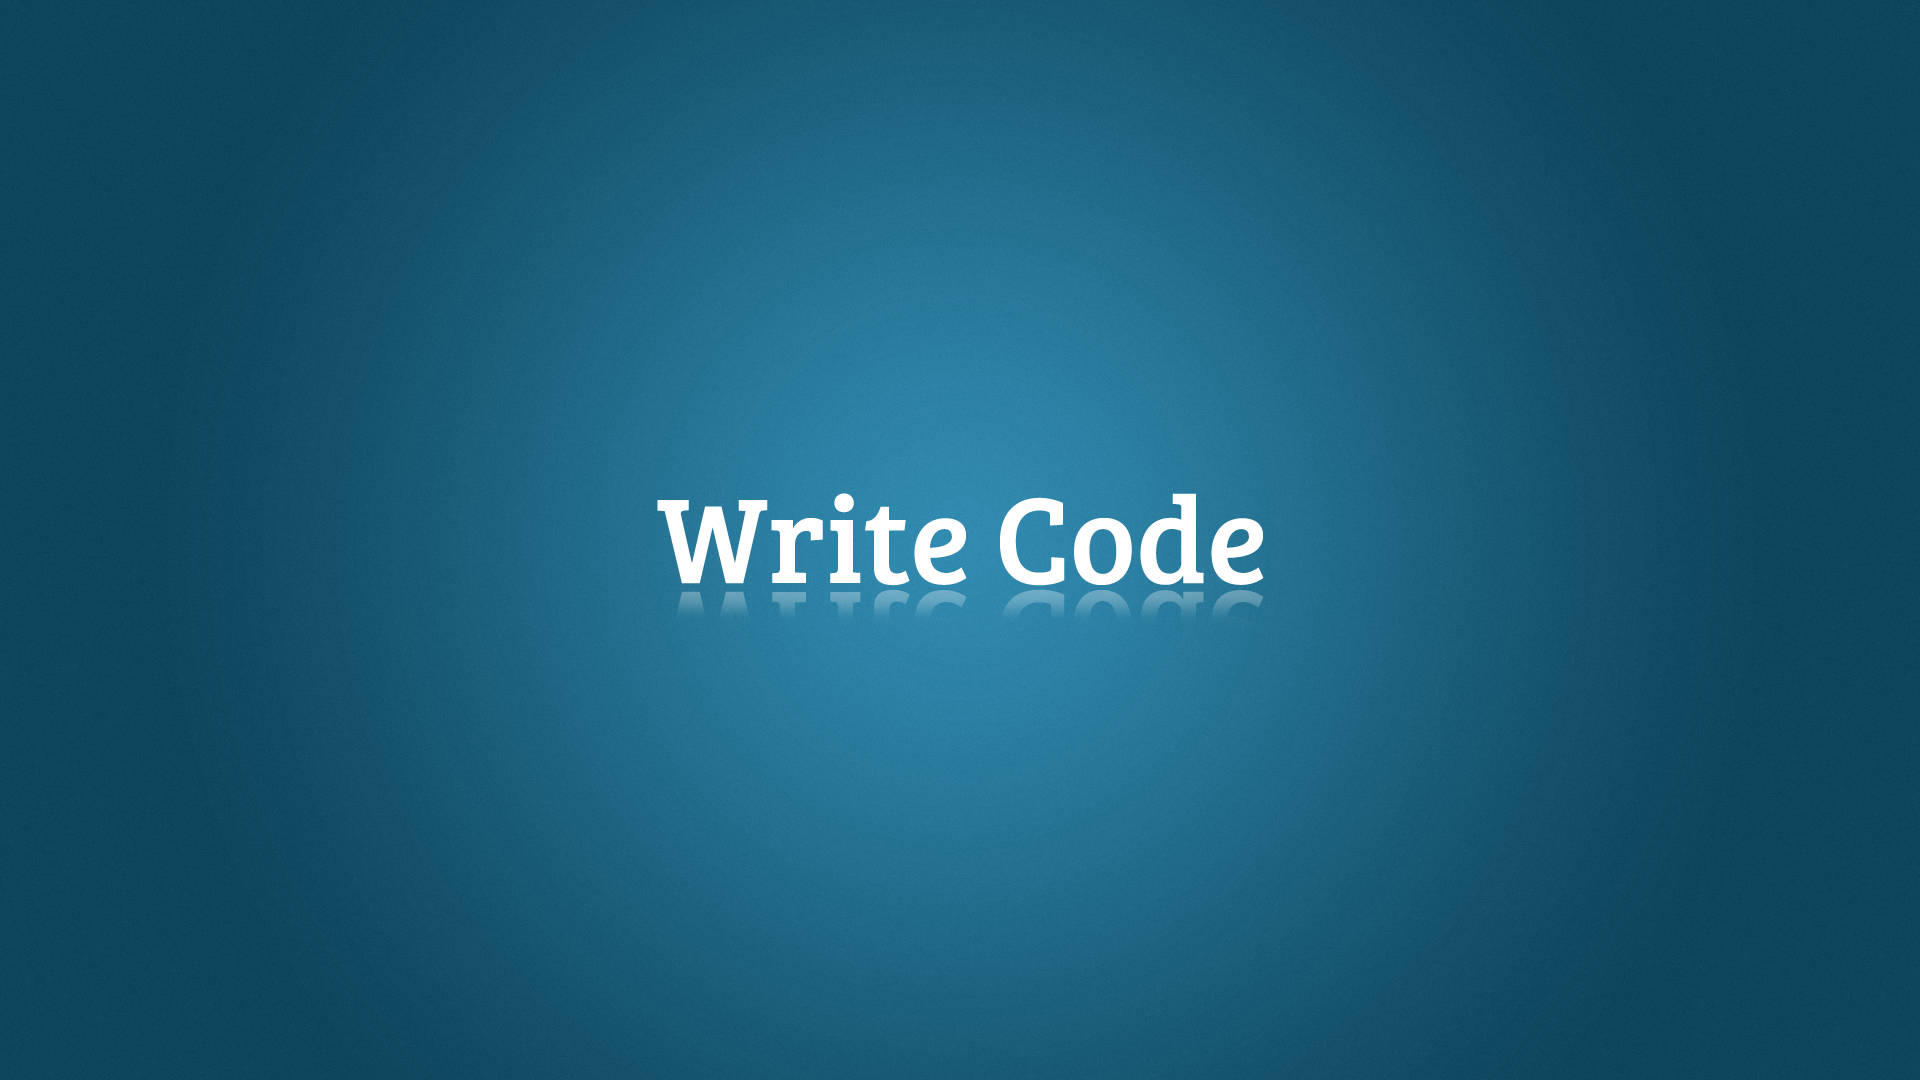 Write Code Coding Background